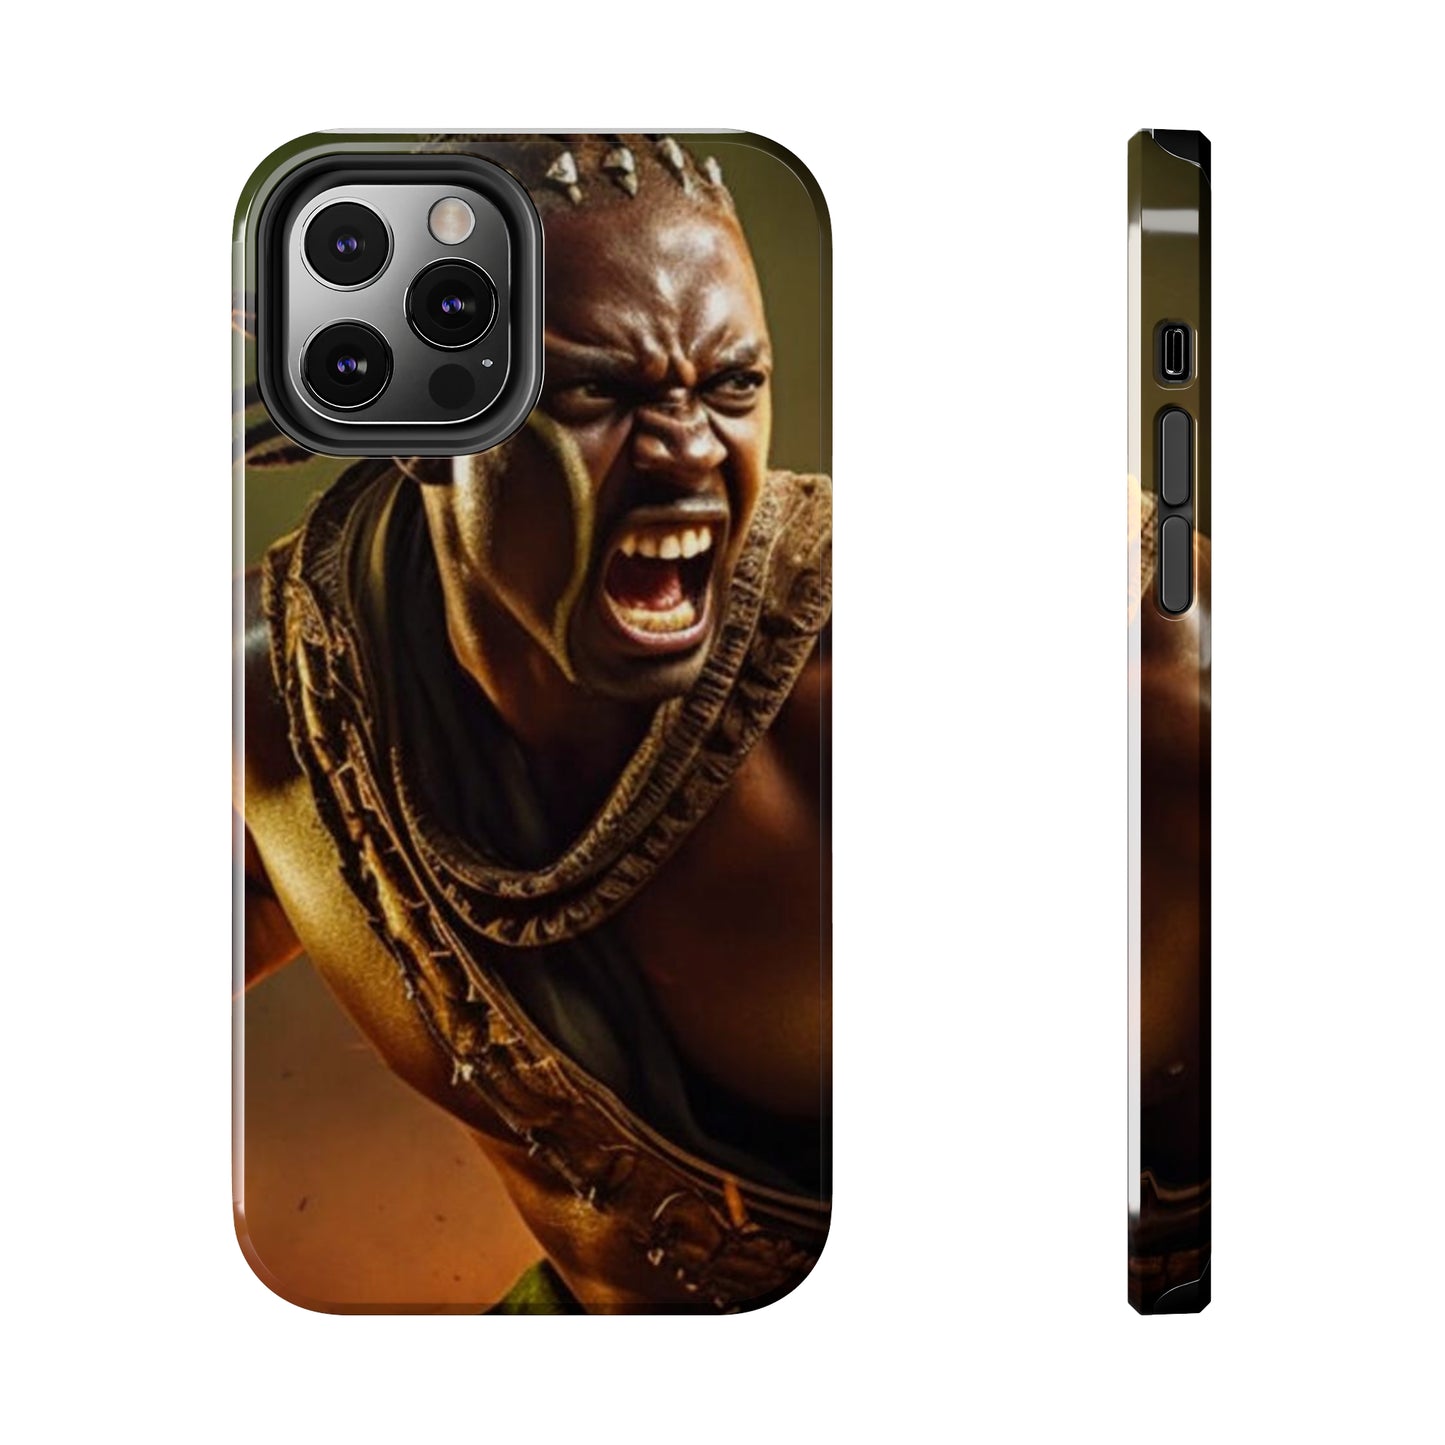 Ogun Tough IPhone Cases